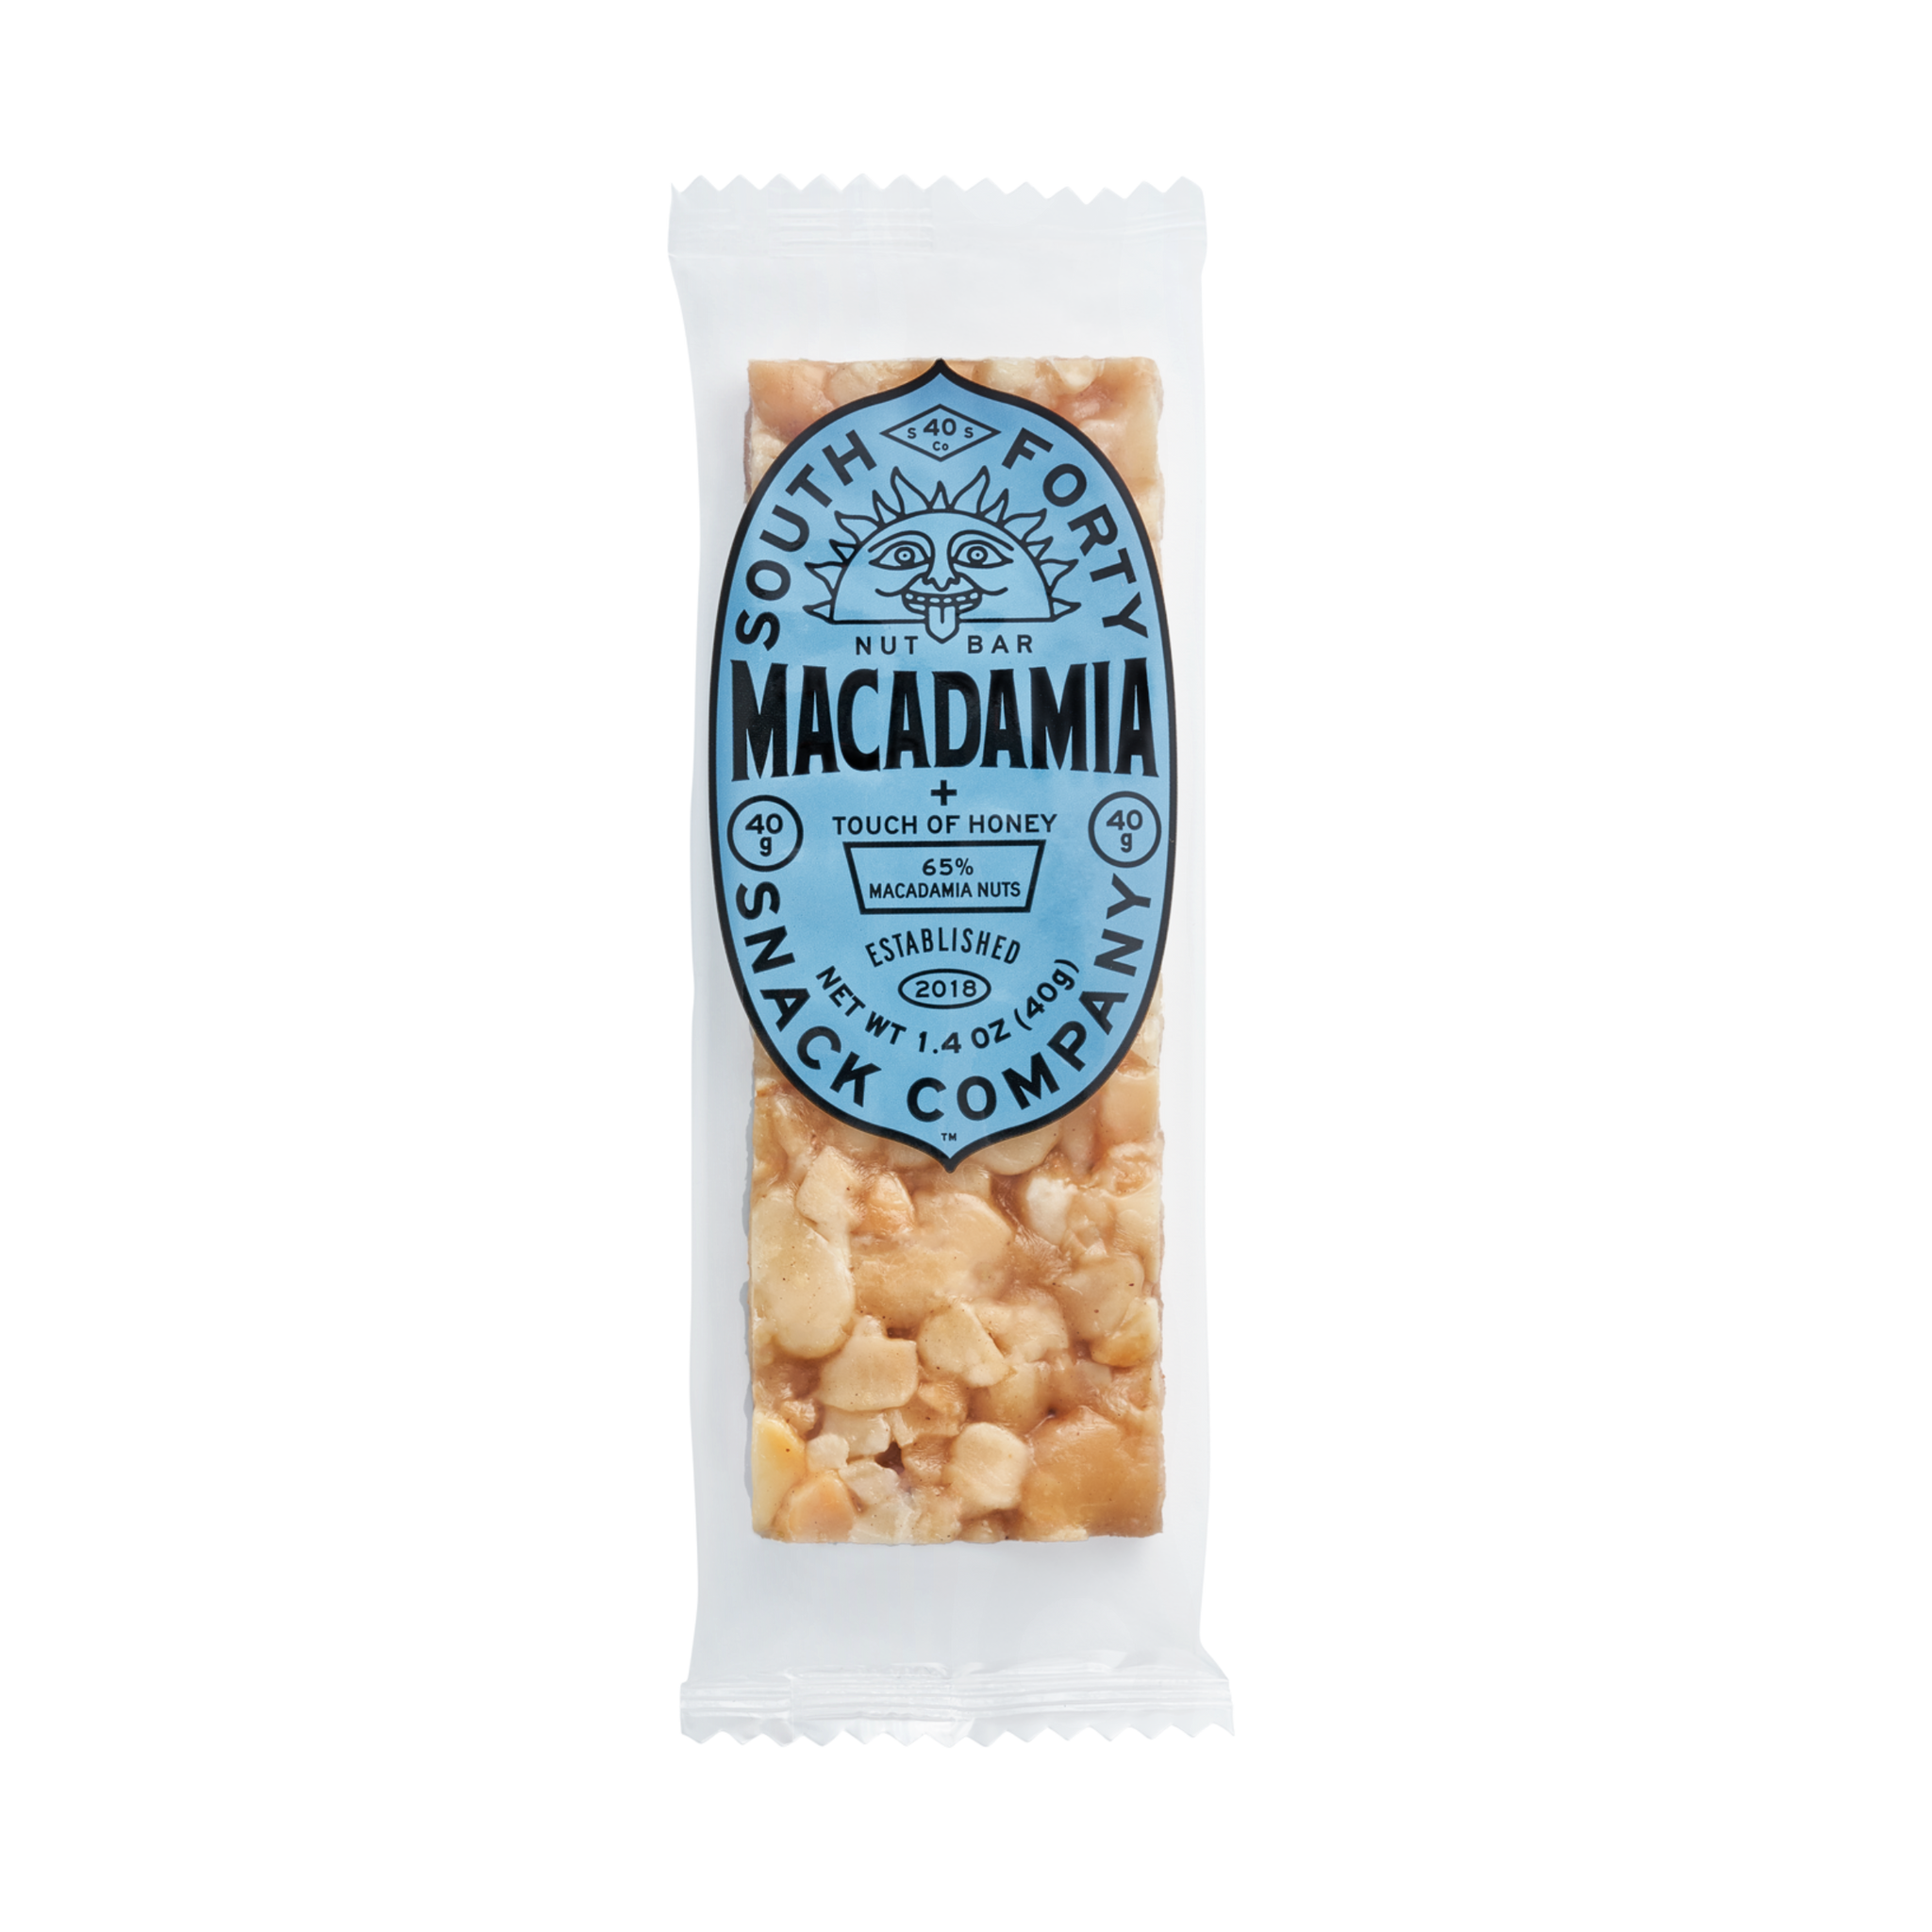 Macadamia 12-Pack